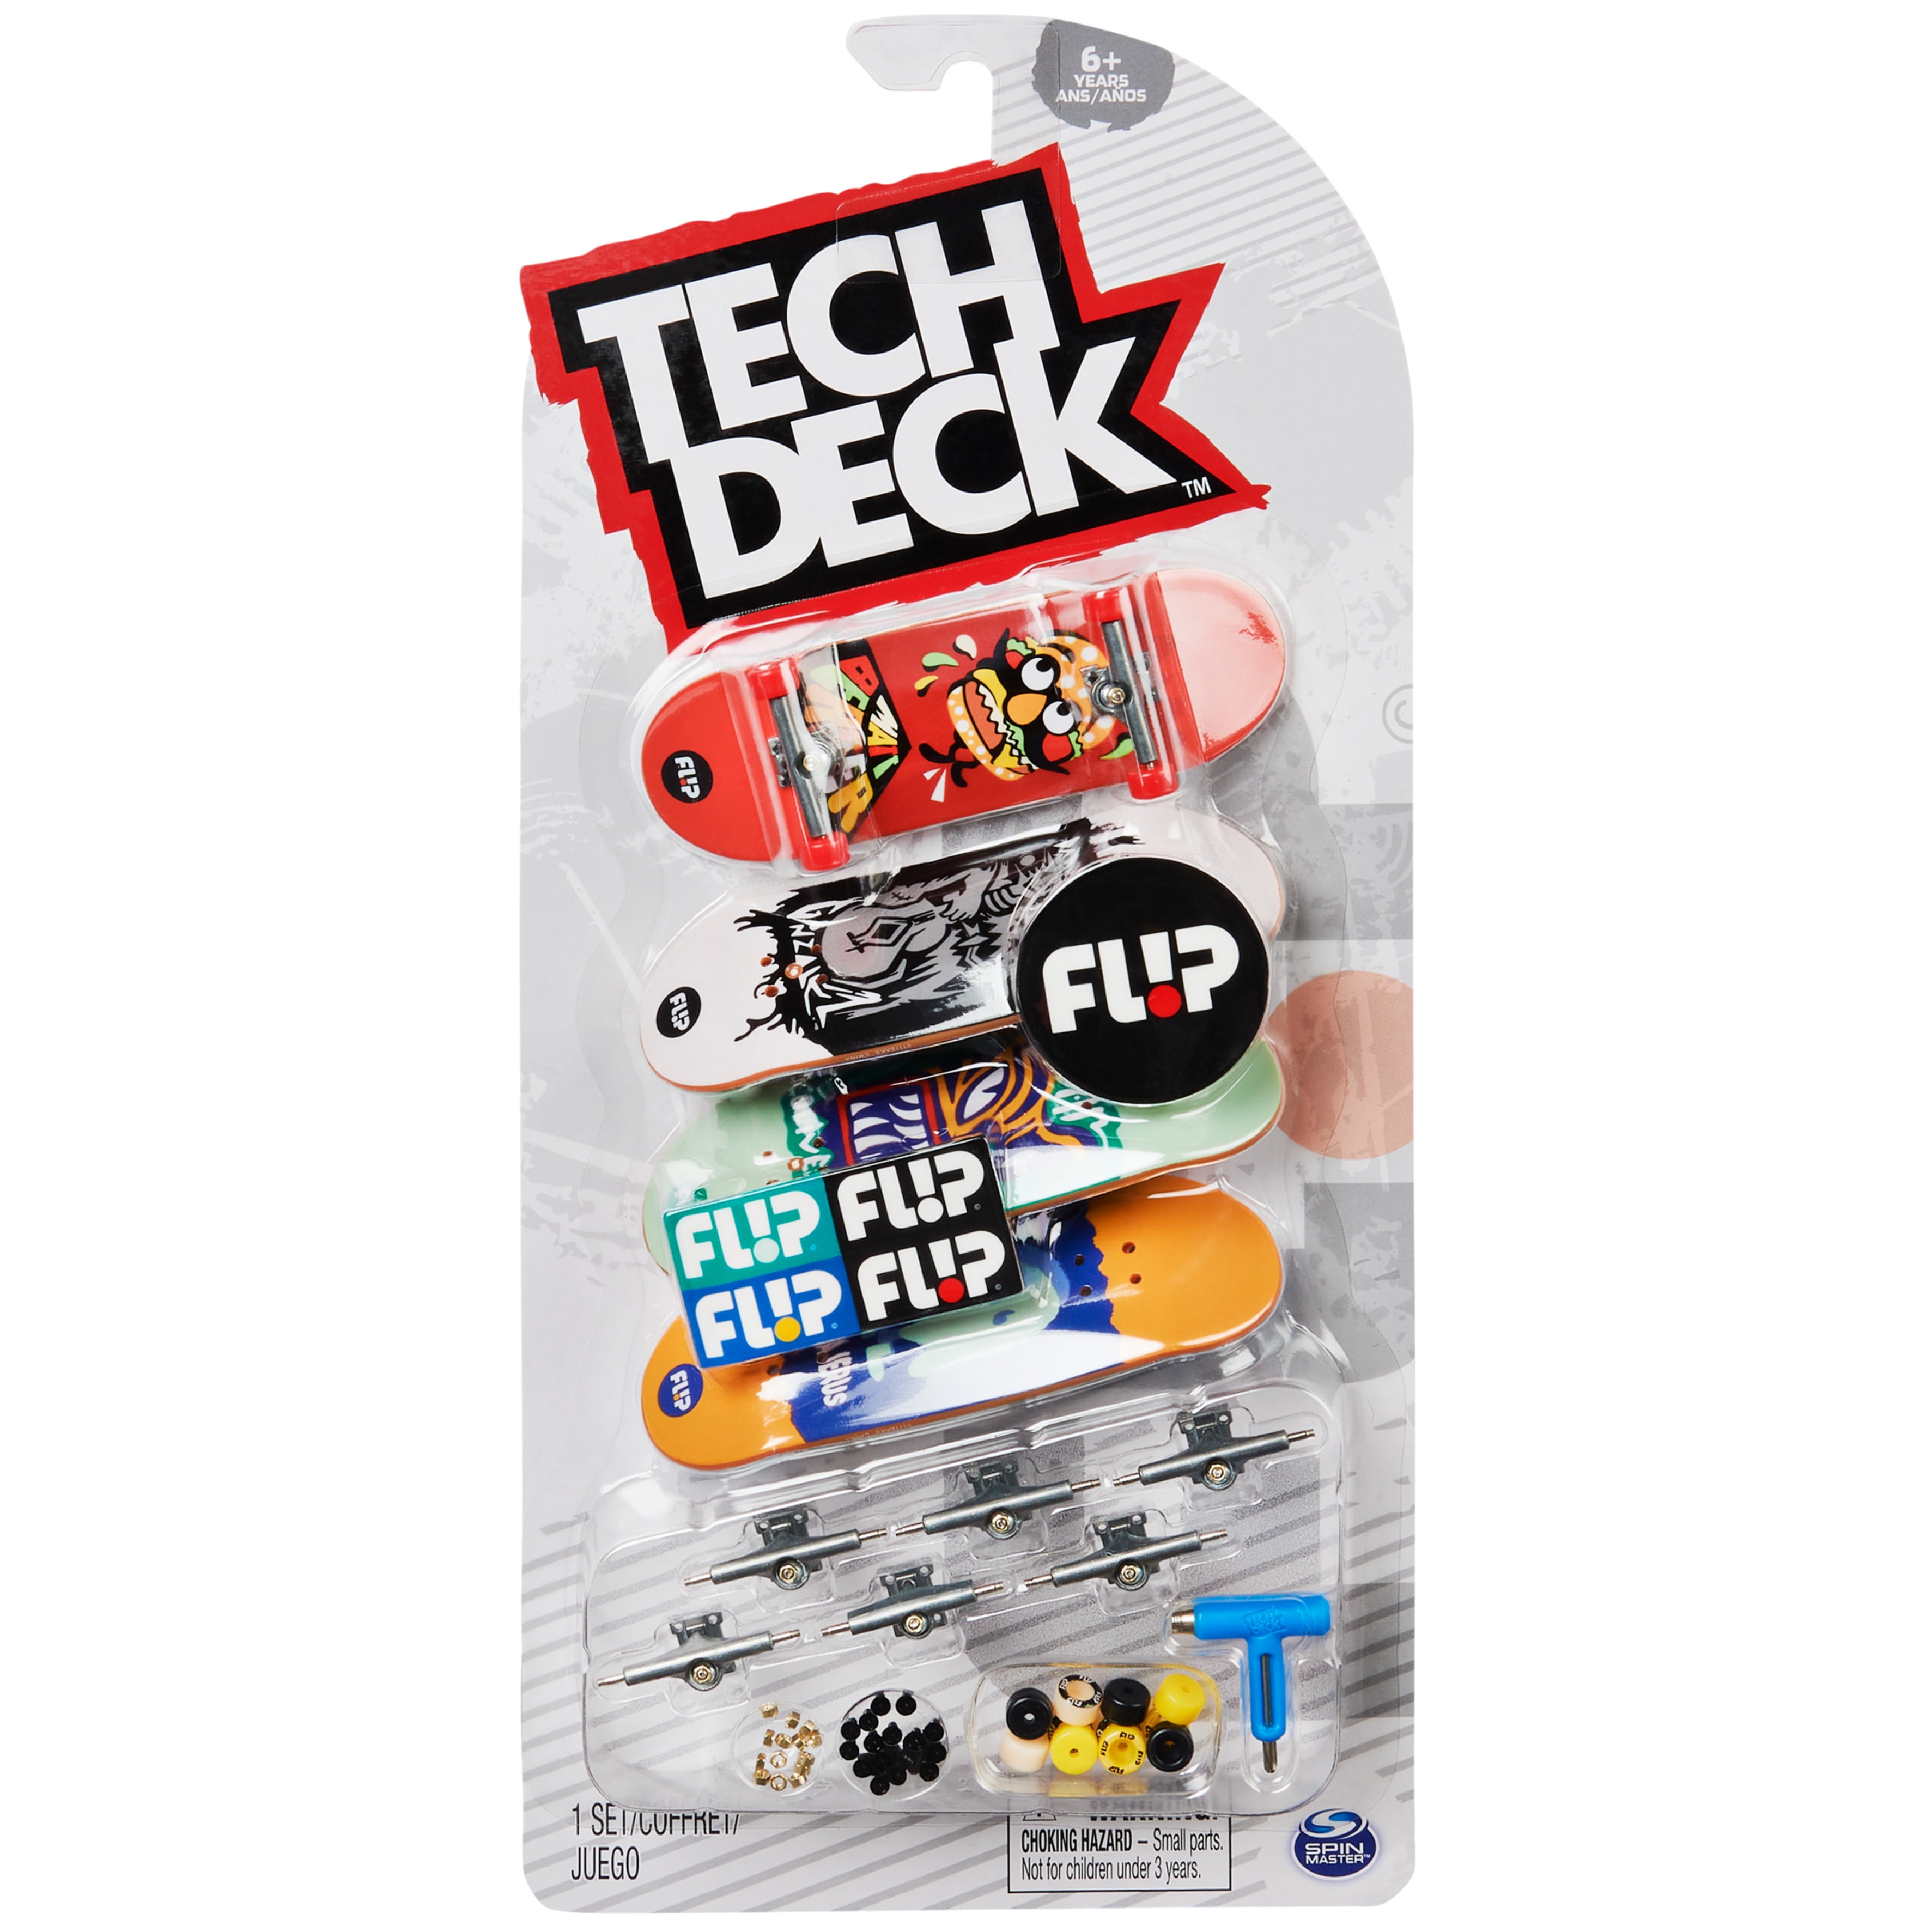 Tech Deck 96mm Flip Skateboards Series 8 Spin Master Toy Fingerboard Rare 